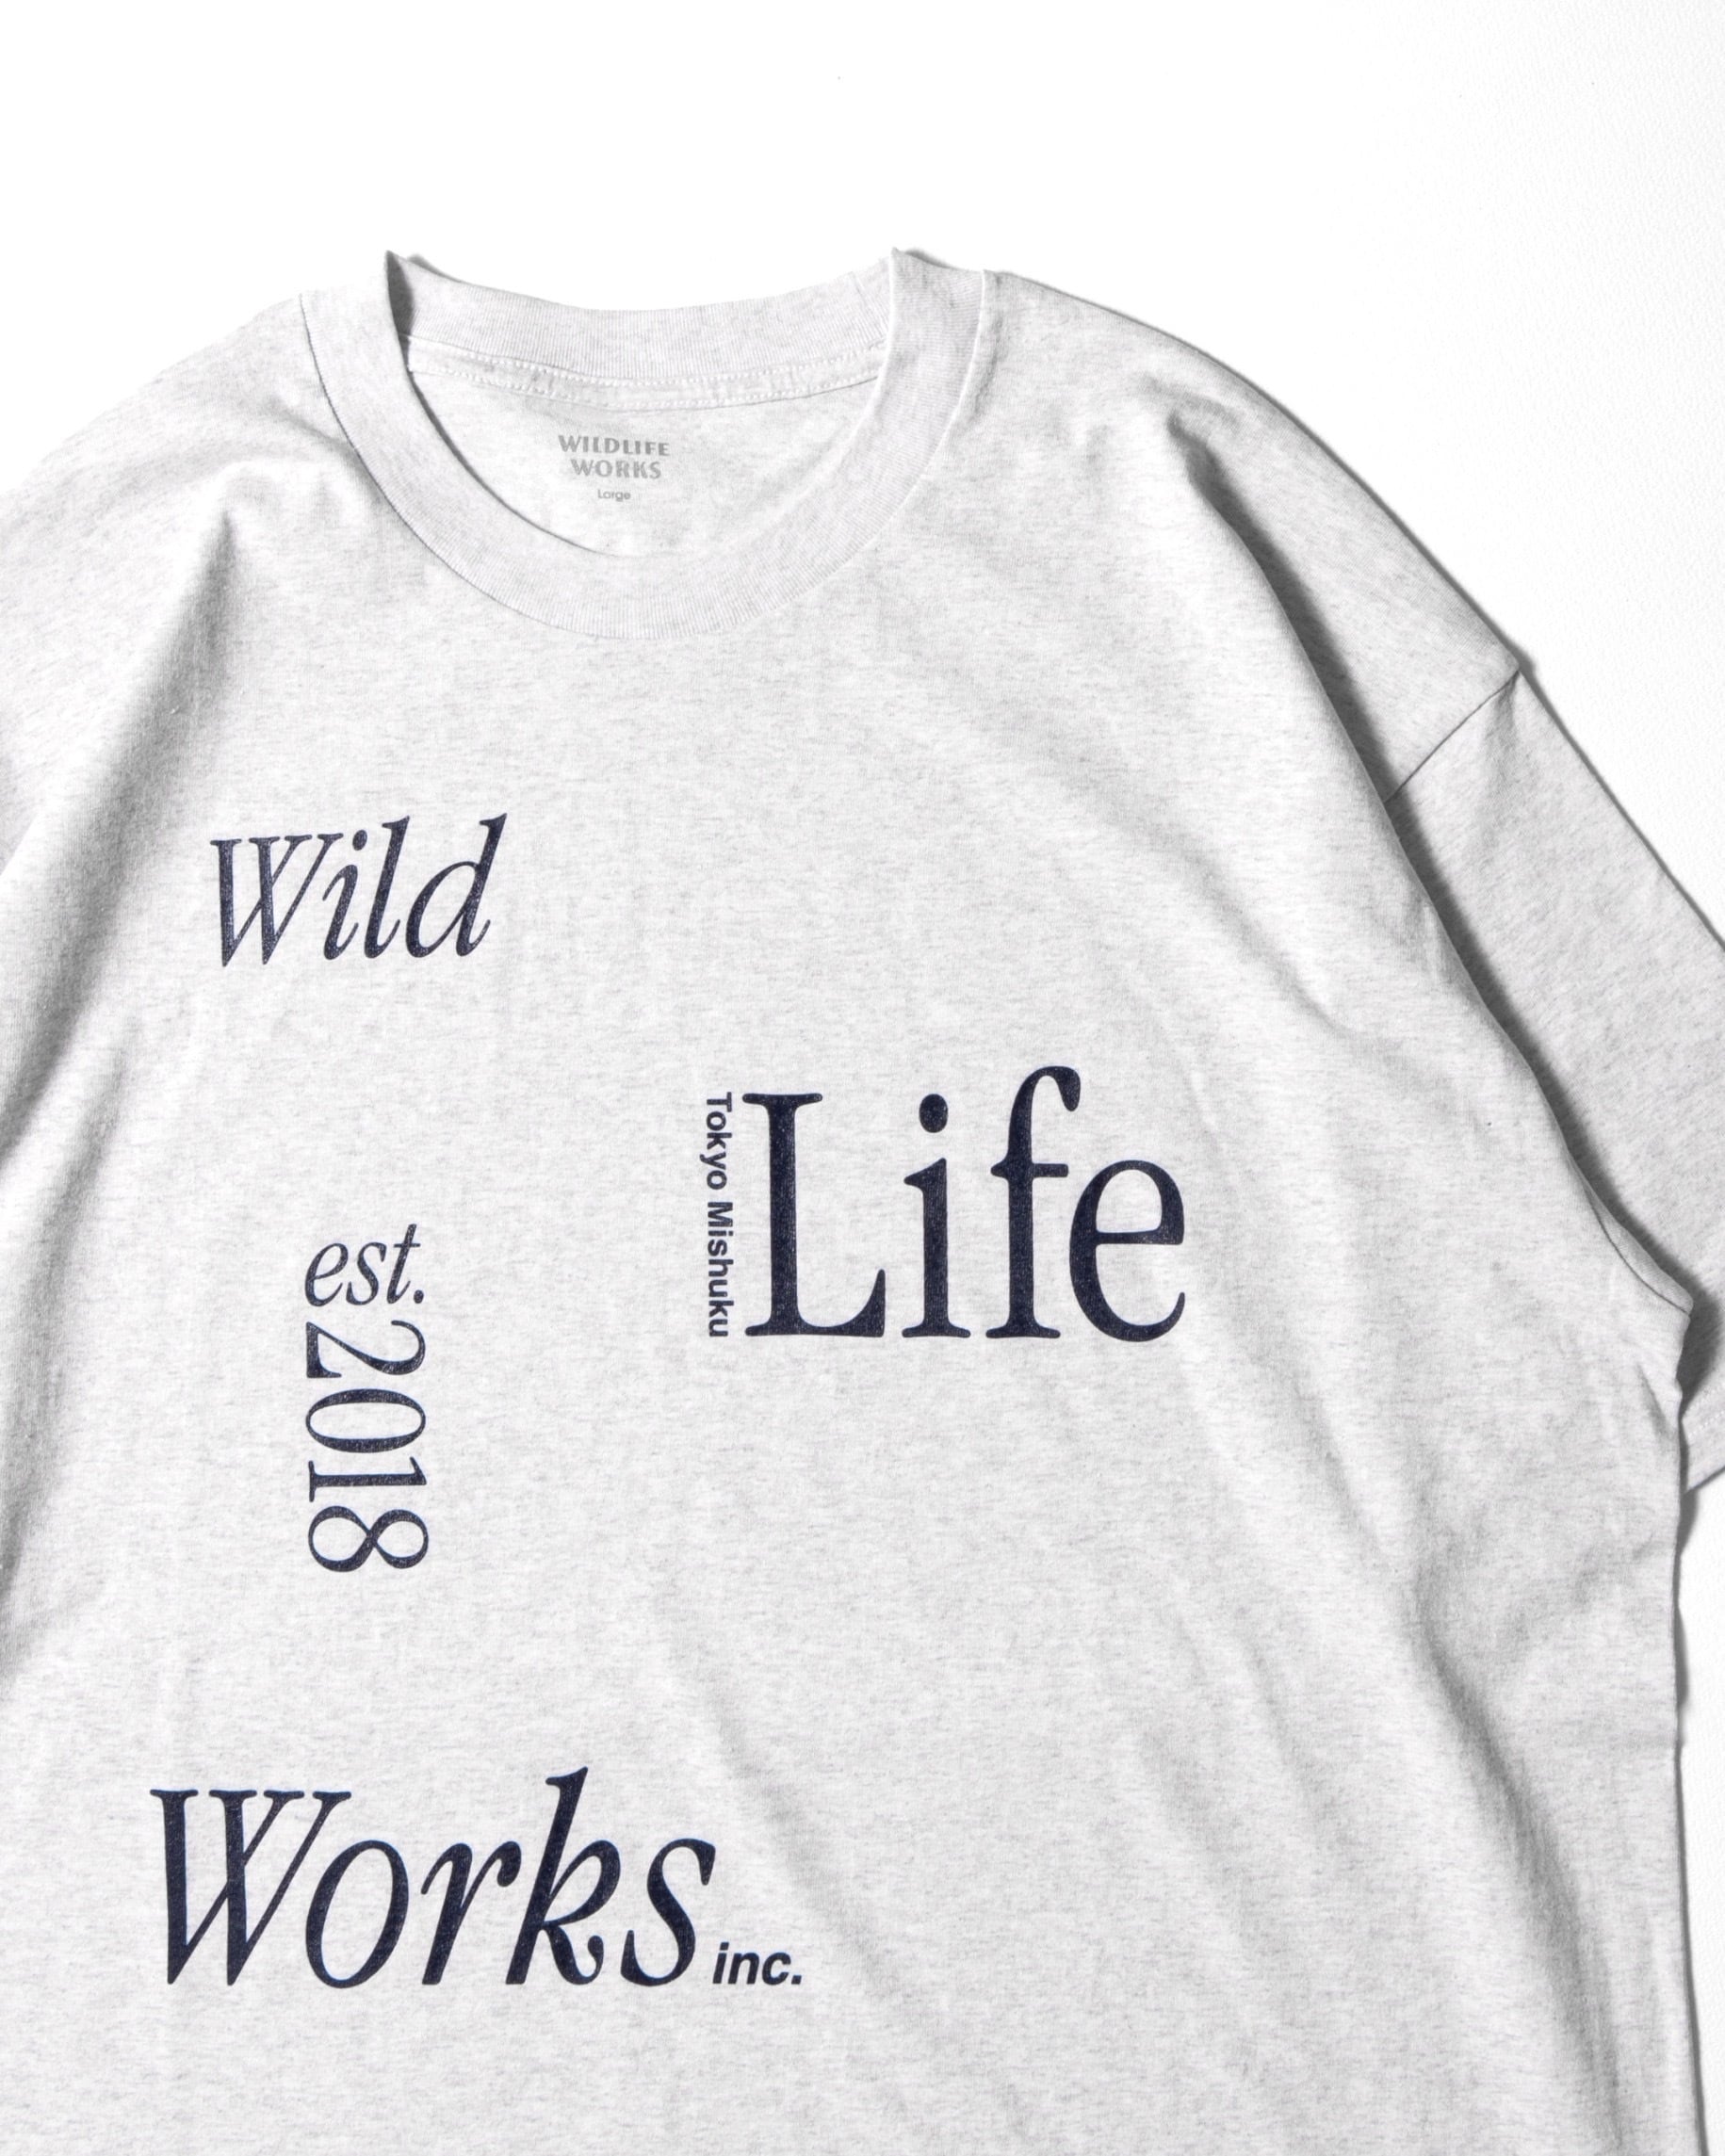 WILDLIFE WORKS 白Tシャツ